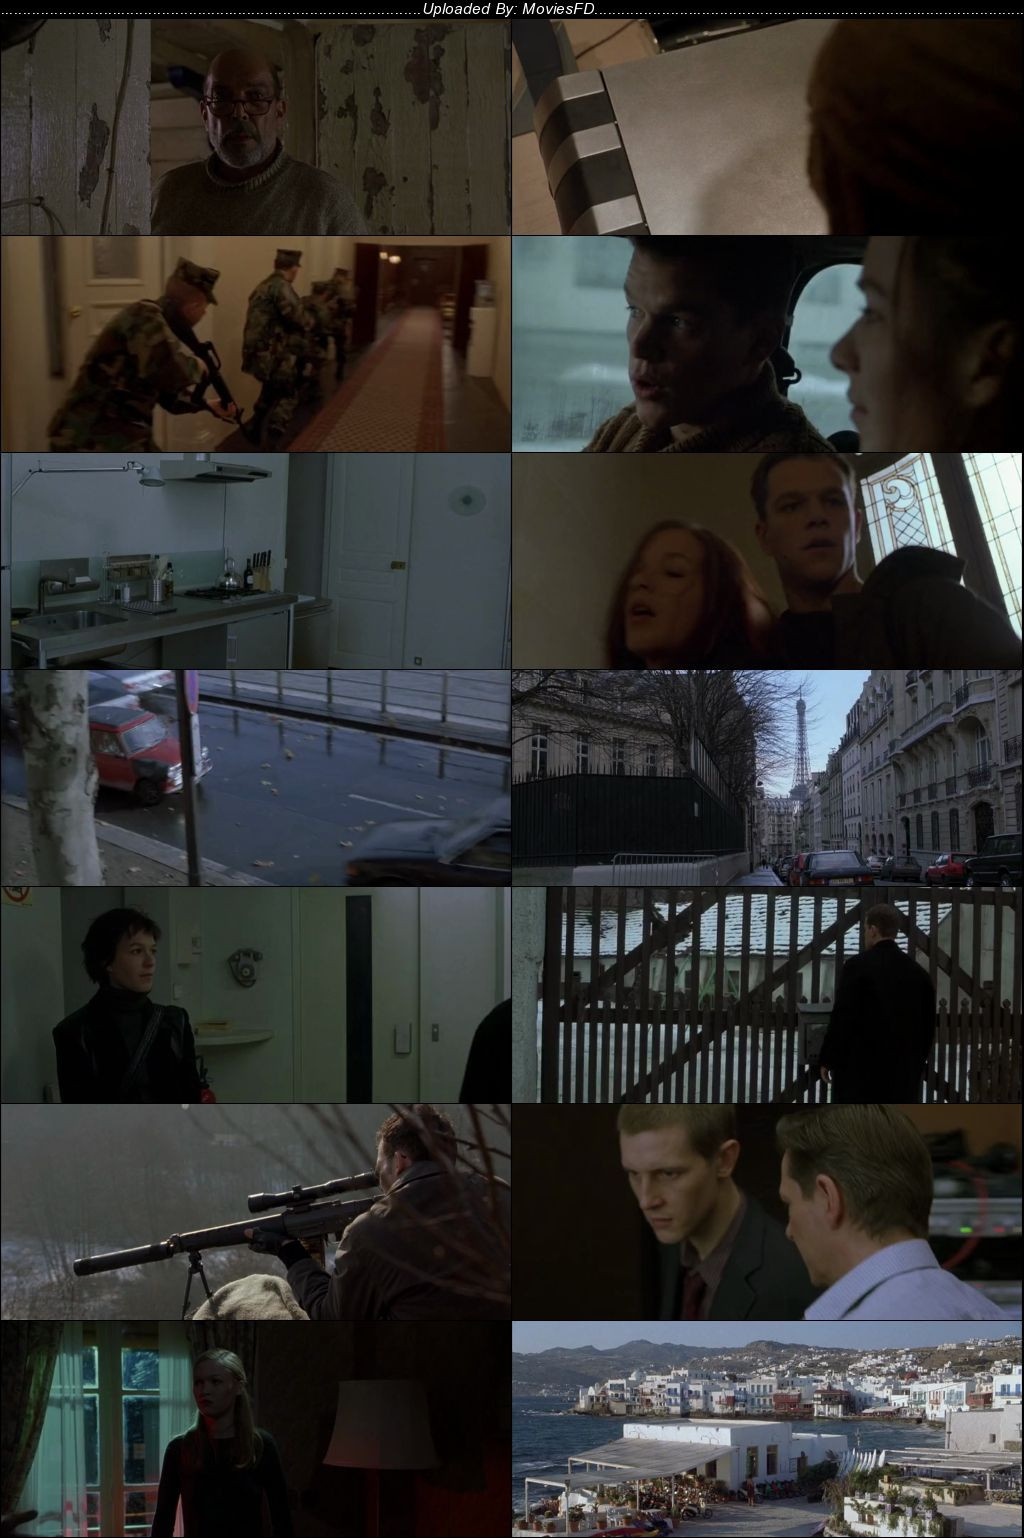 Download The Bourne Identity (2002) BluRay [Hindi + English] ESub 480p 720p